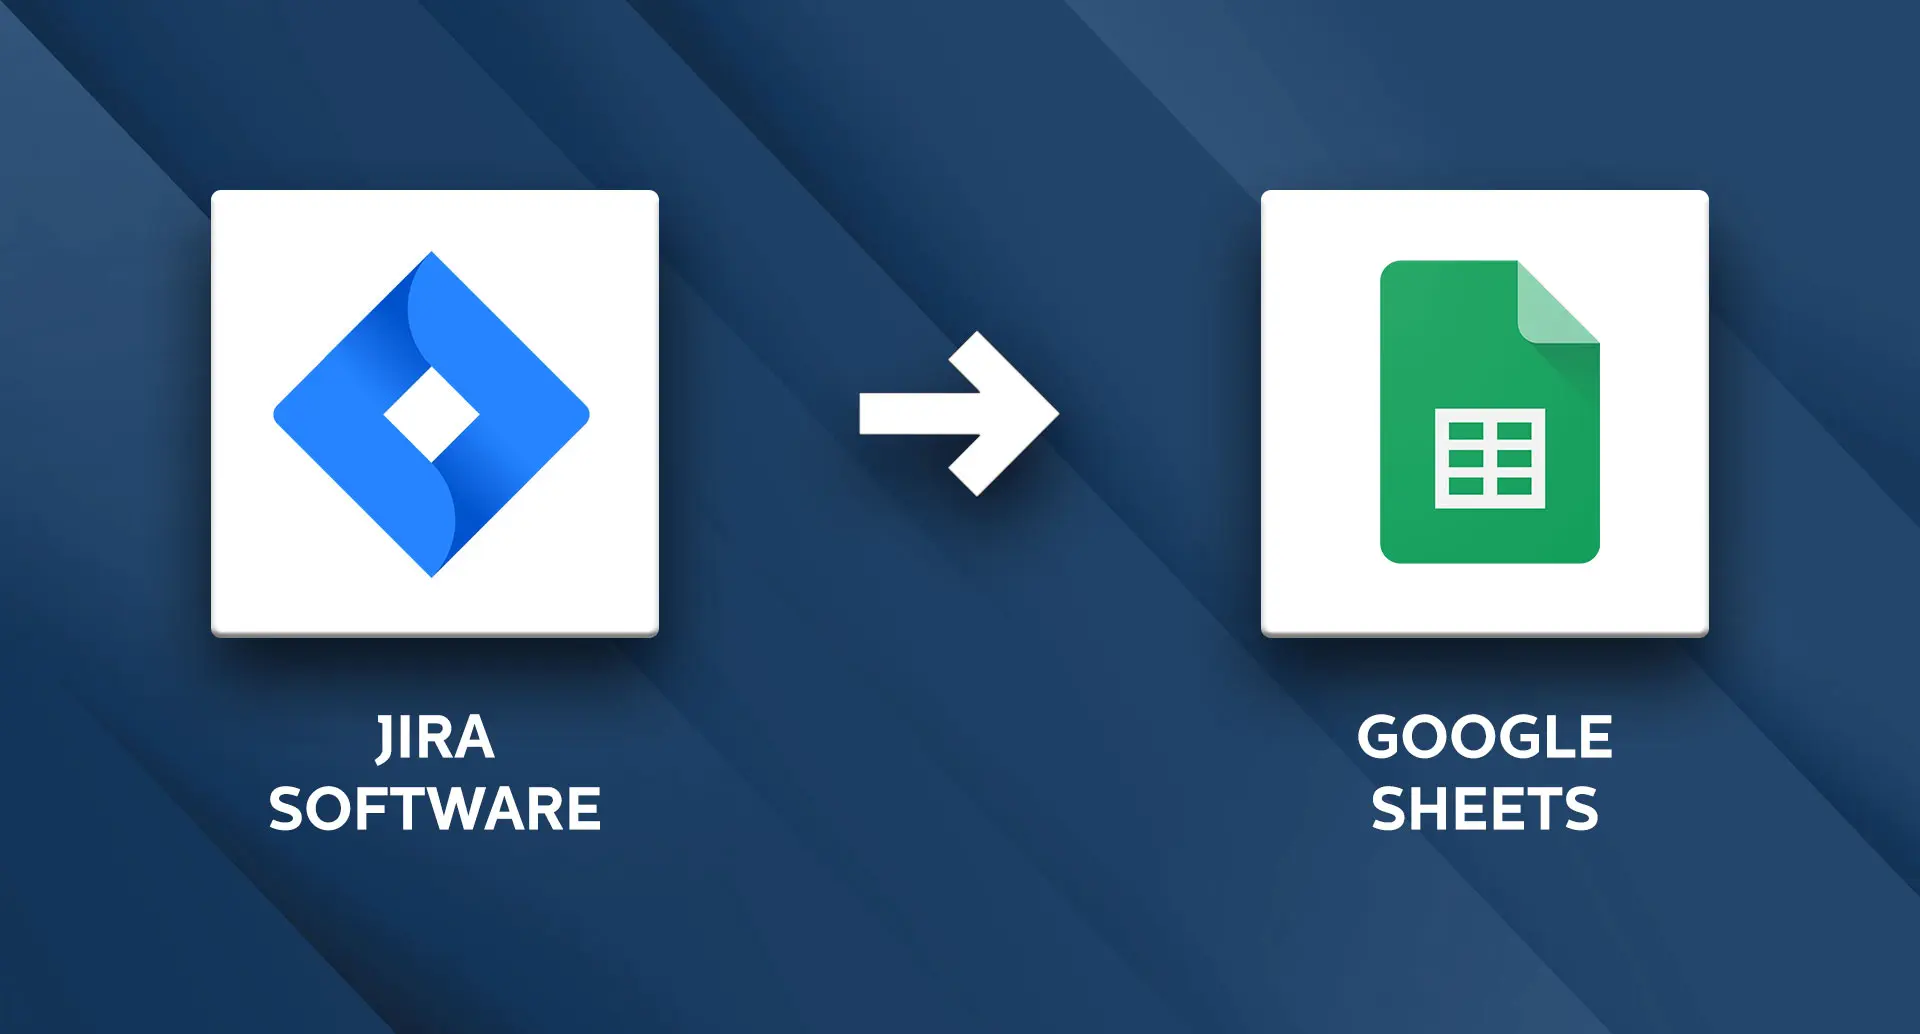 Atlassian Jira logo connected with an arrow to the Google Sheets logo